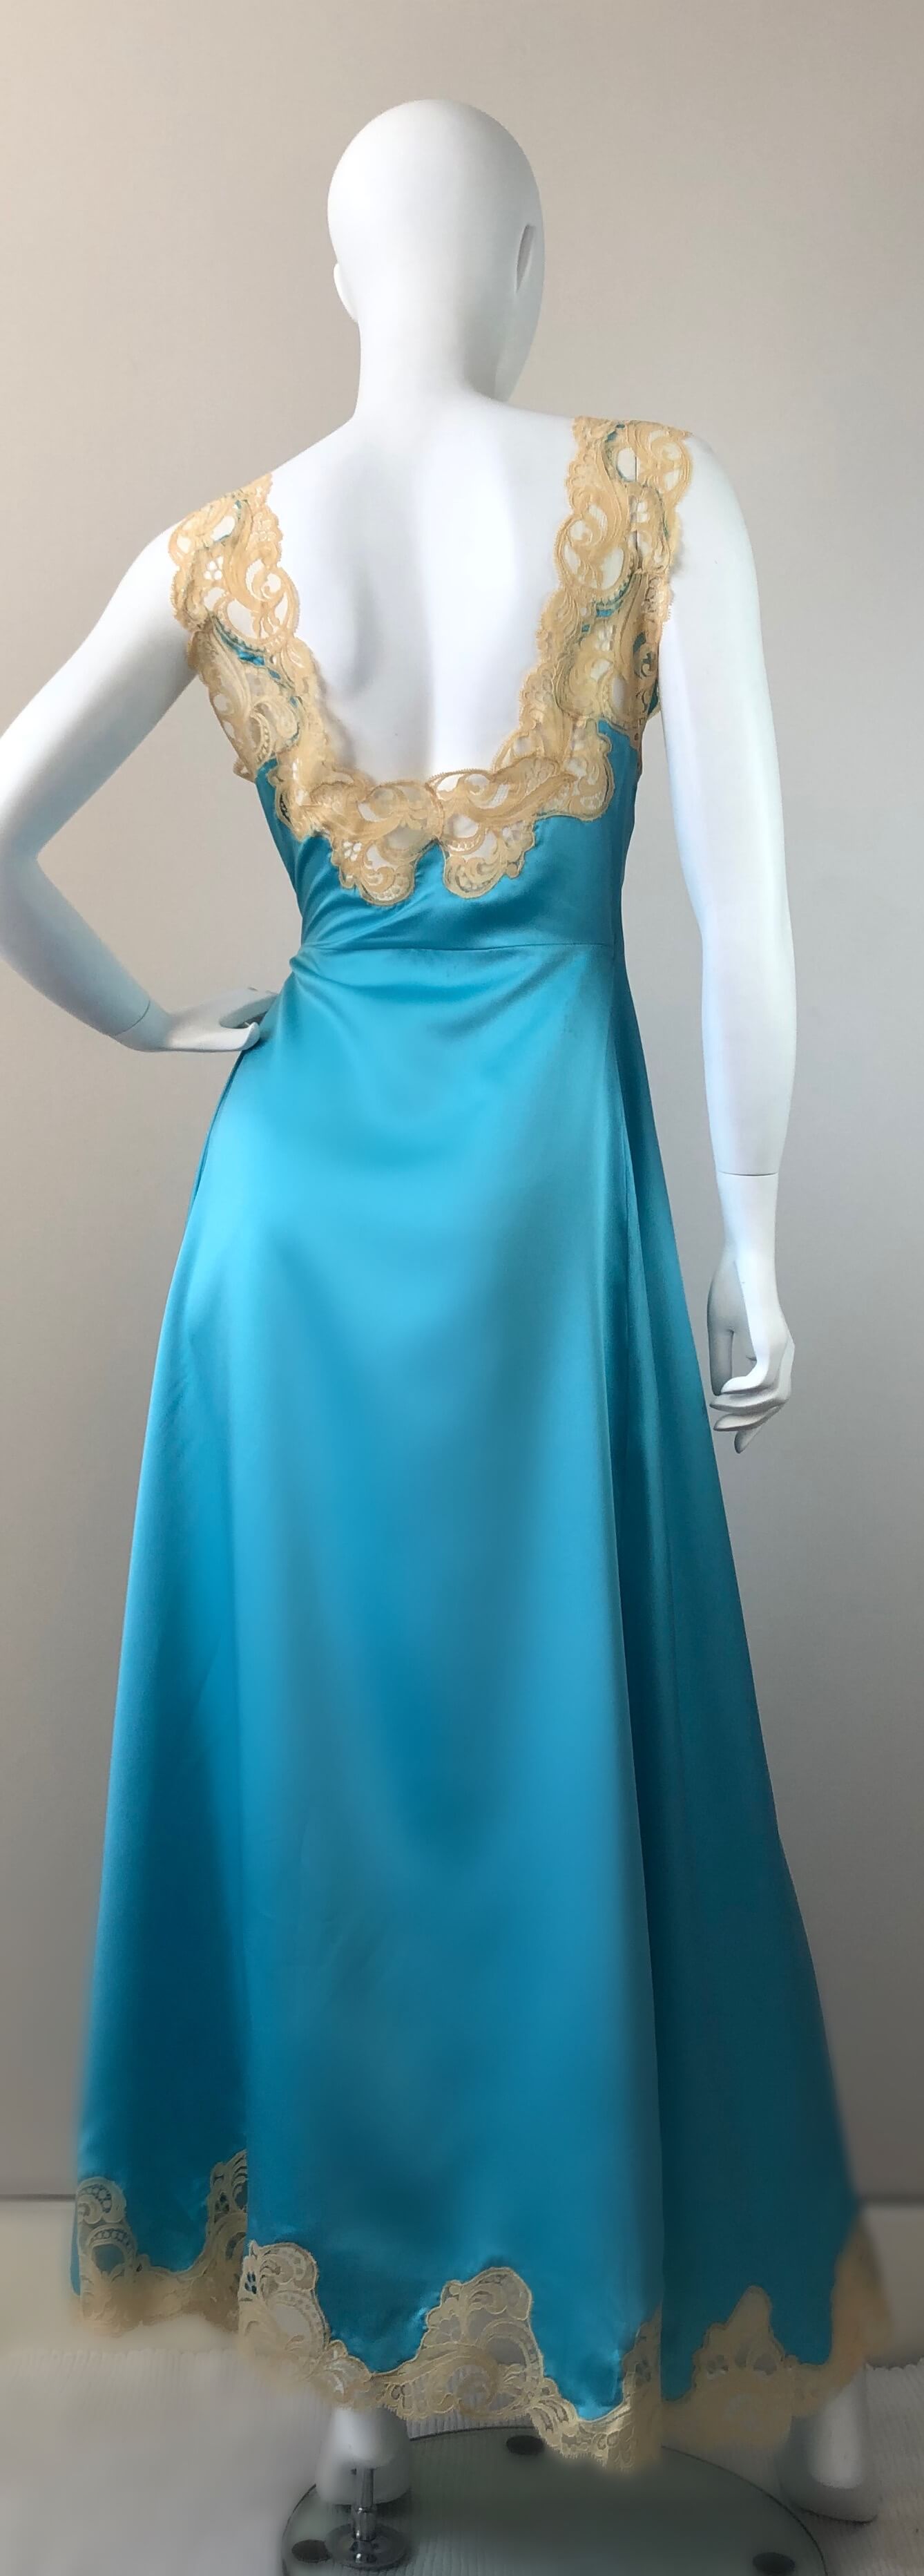 Blue satin dress